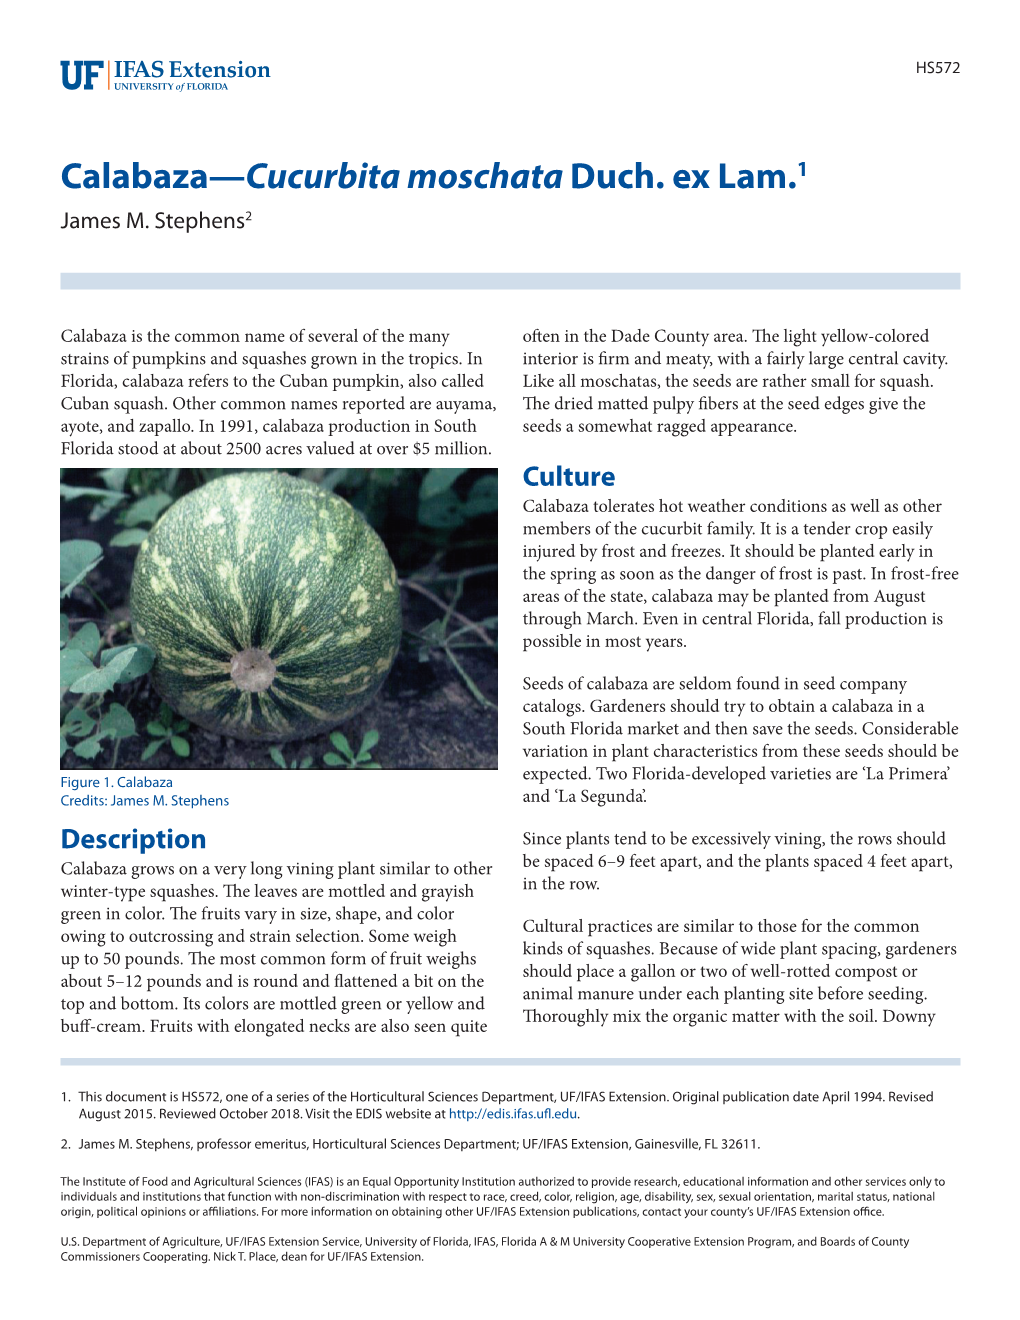 Calabaza—Cucurbita Moschata Duch